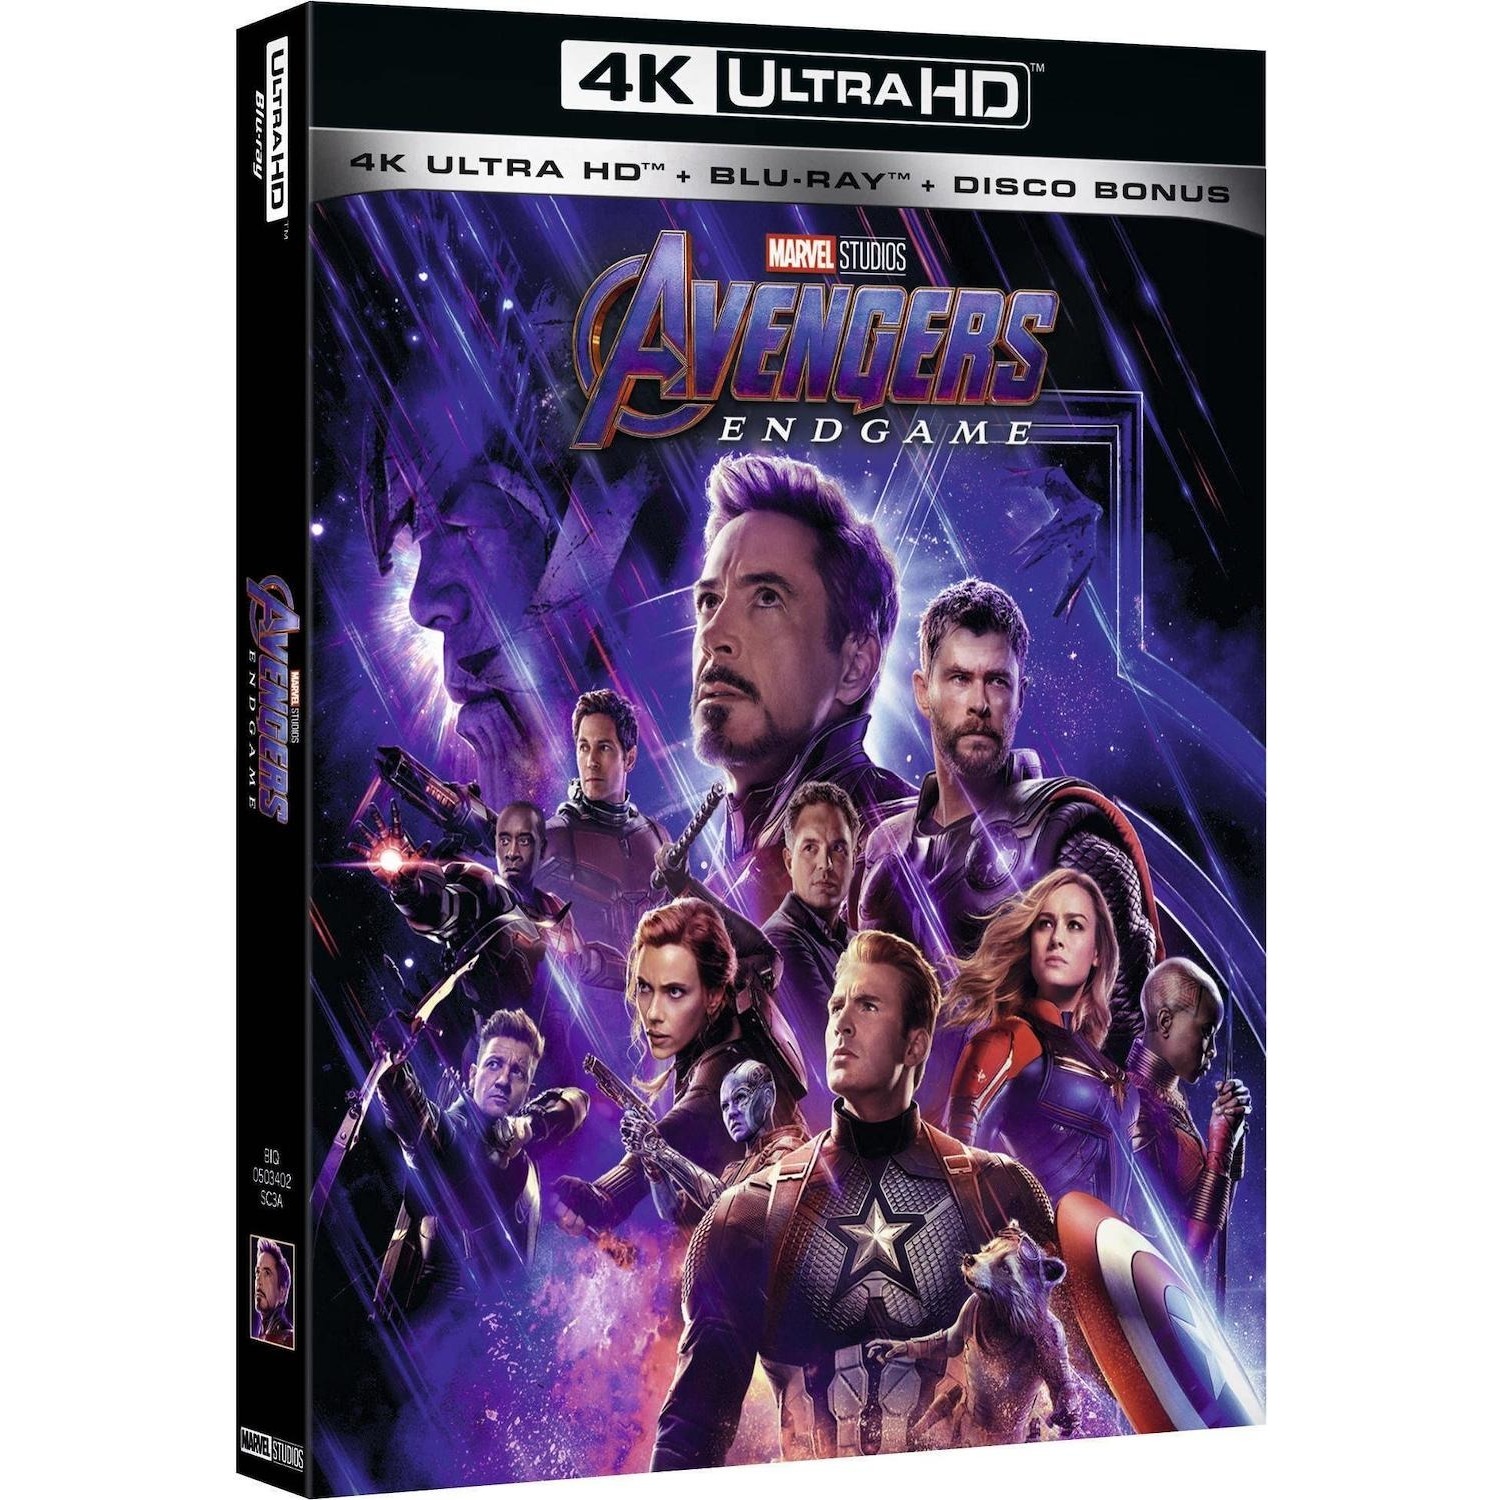 Immagine per Blu-ray 4K Avengers Endgame da DIMOStore